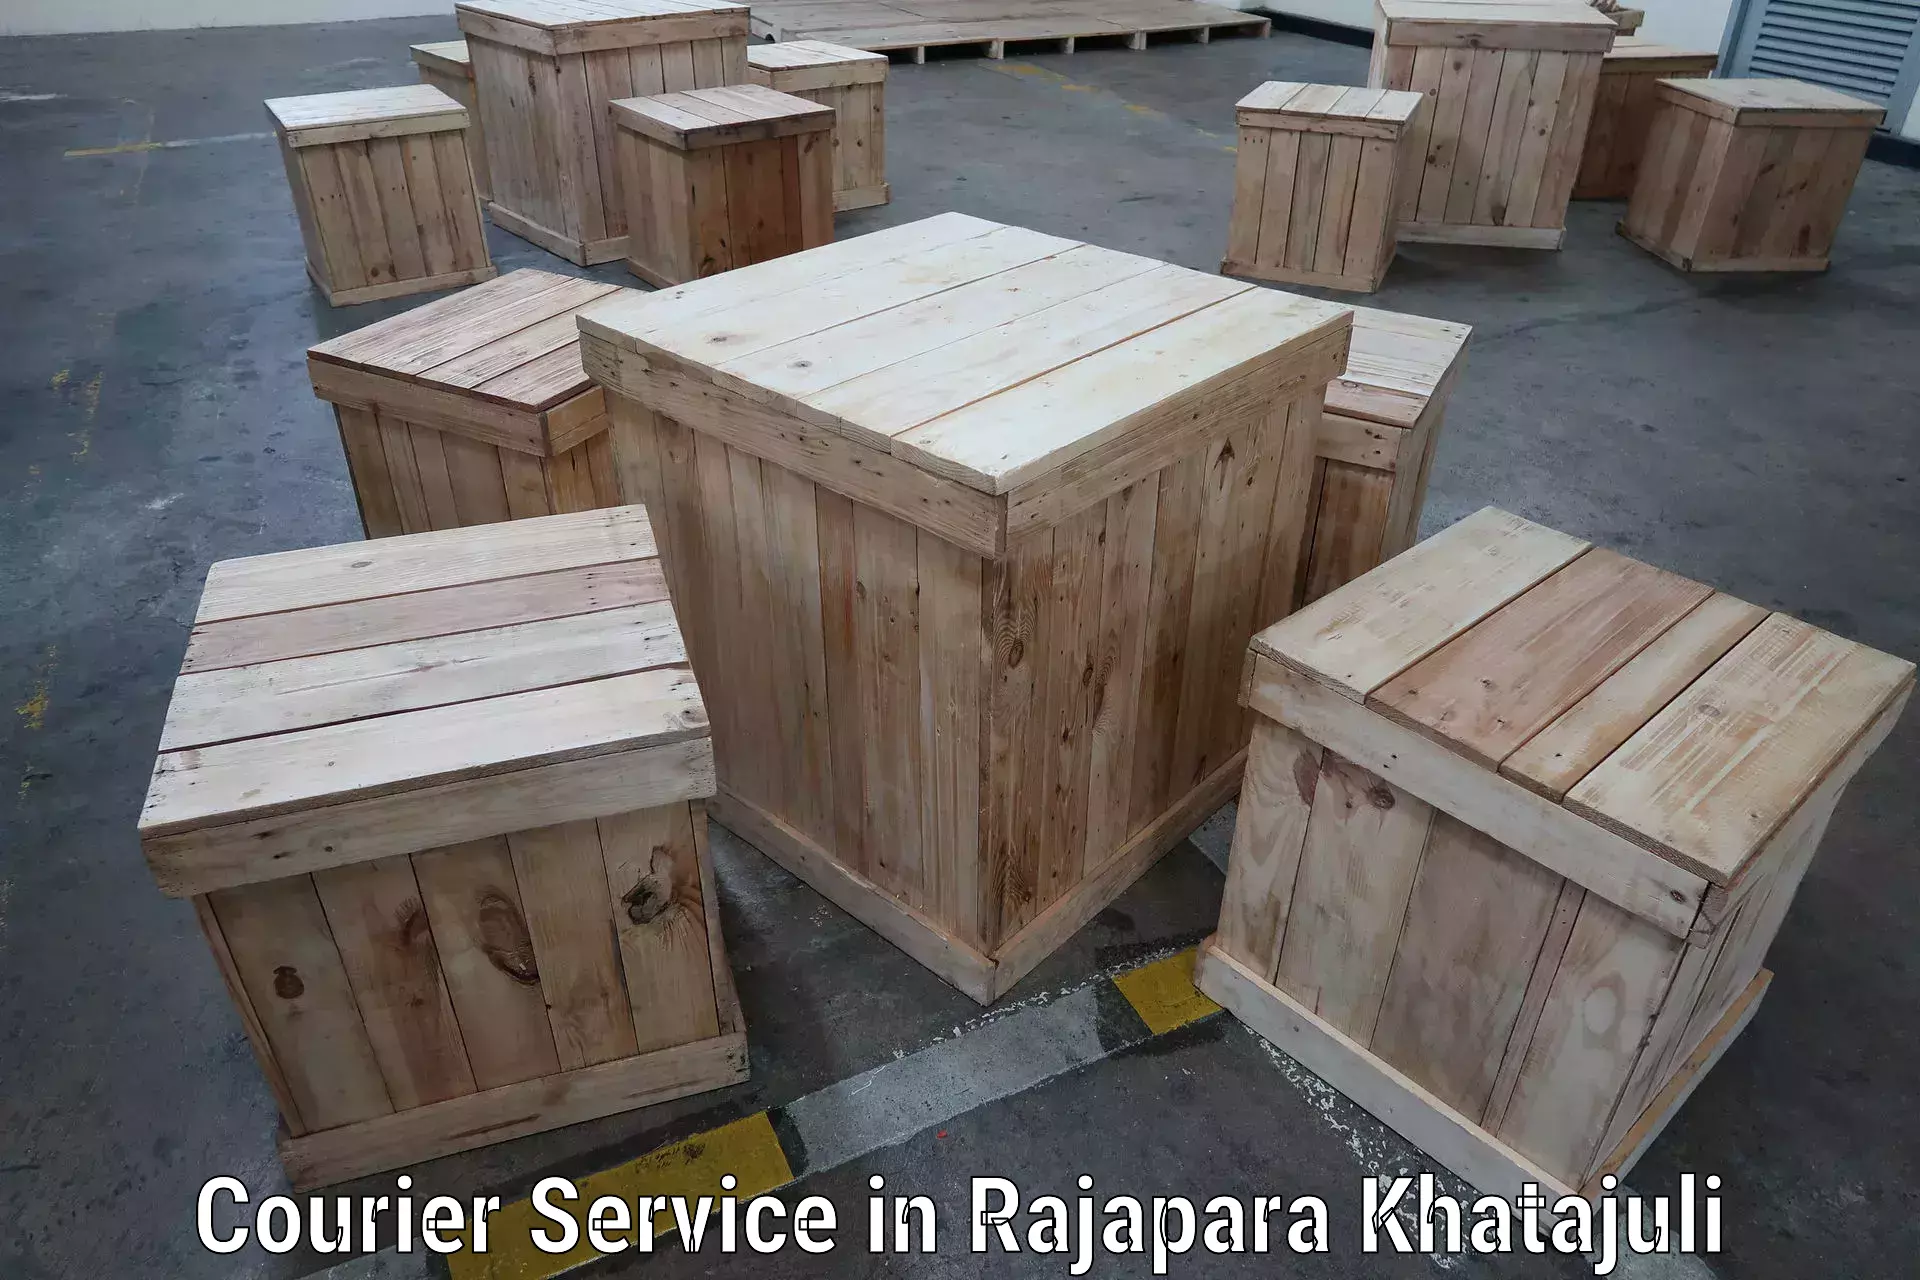 Efficient freight service in Rajapara Khatajuli